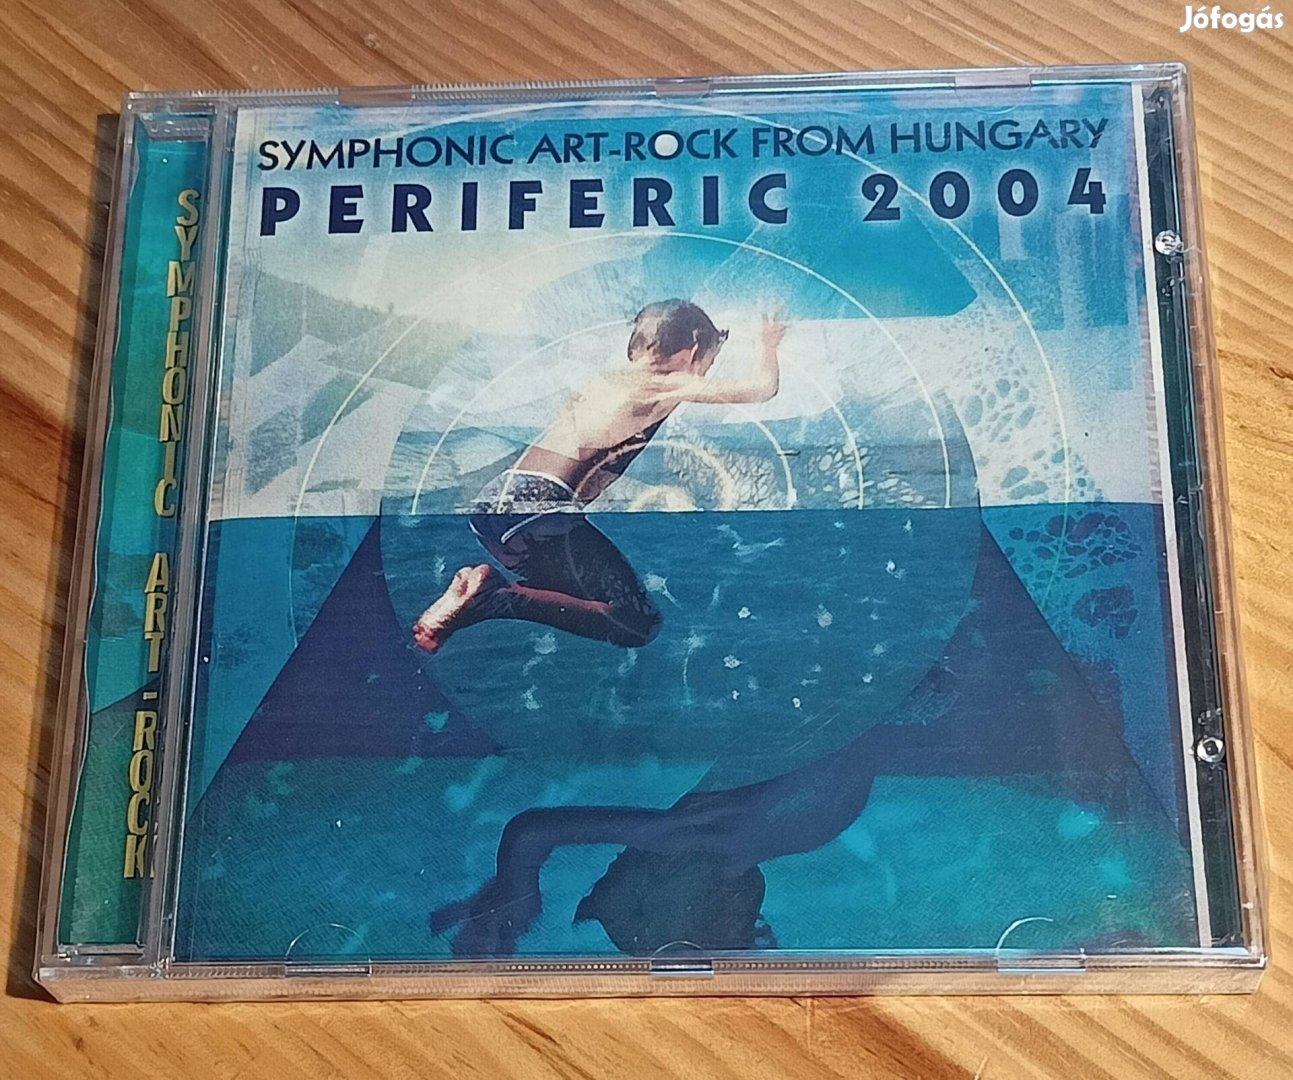 Periferic 2004 - Symphonic ART-Rock FROM Hungary CD